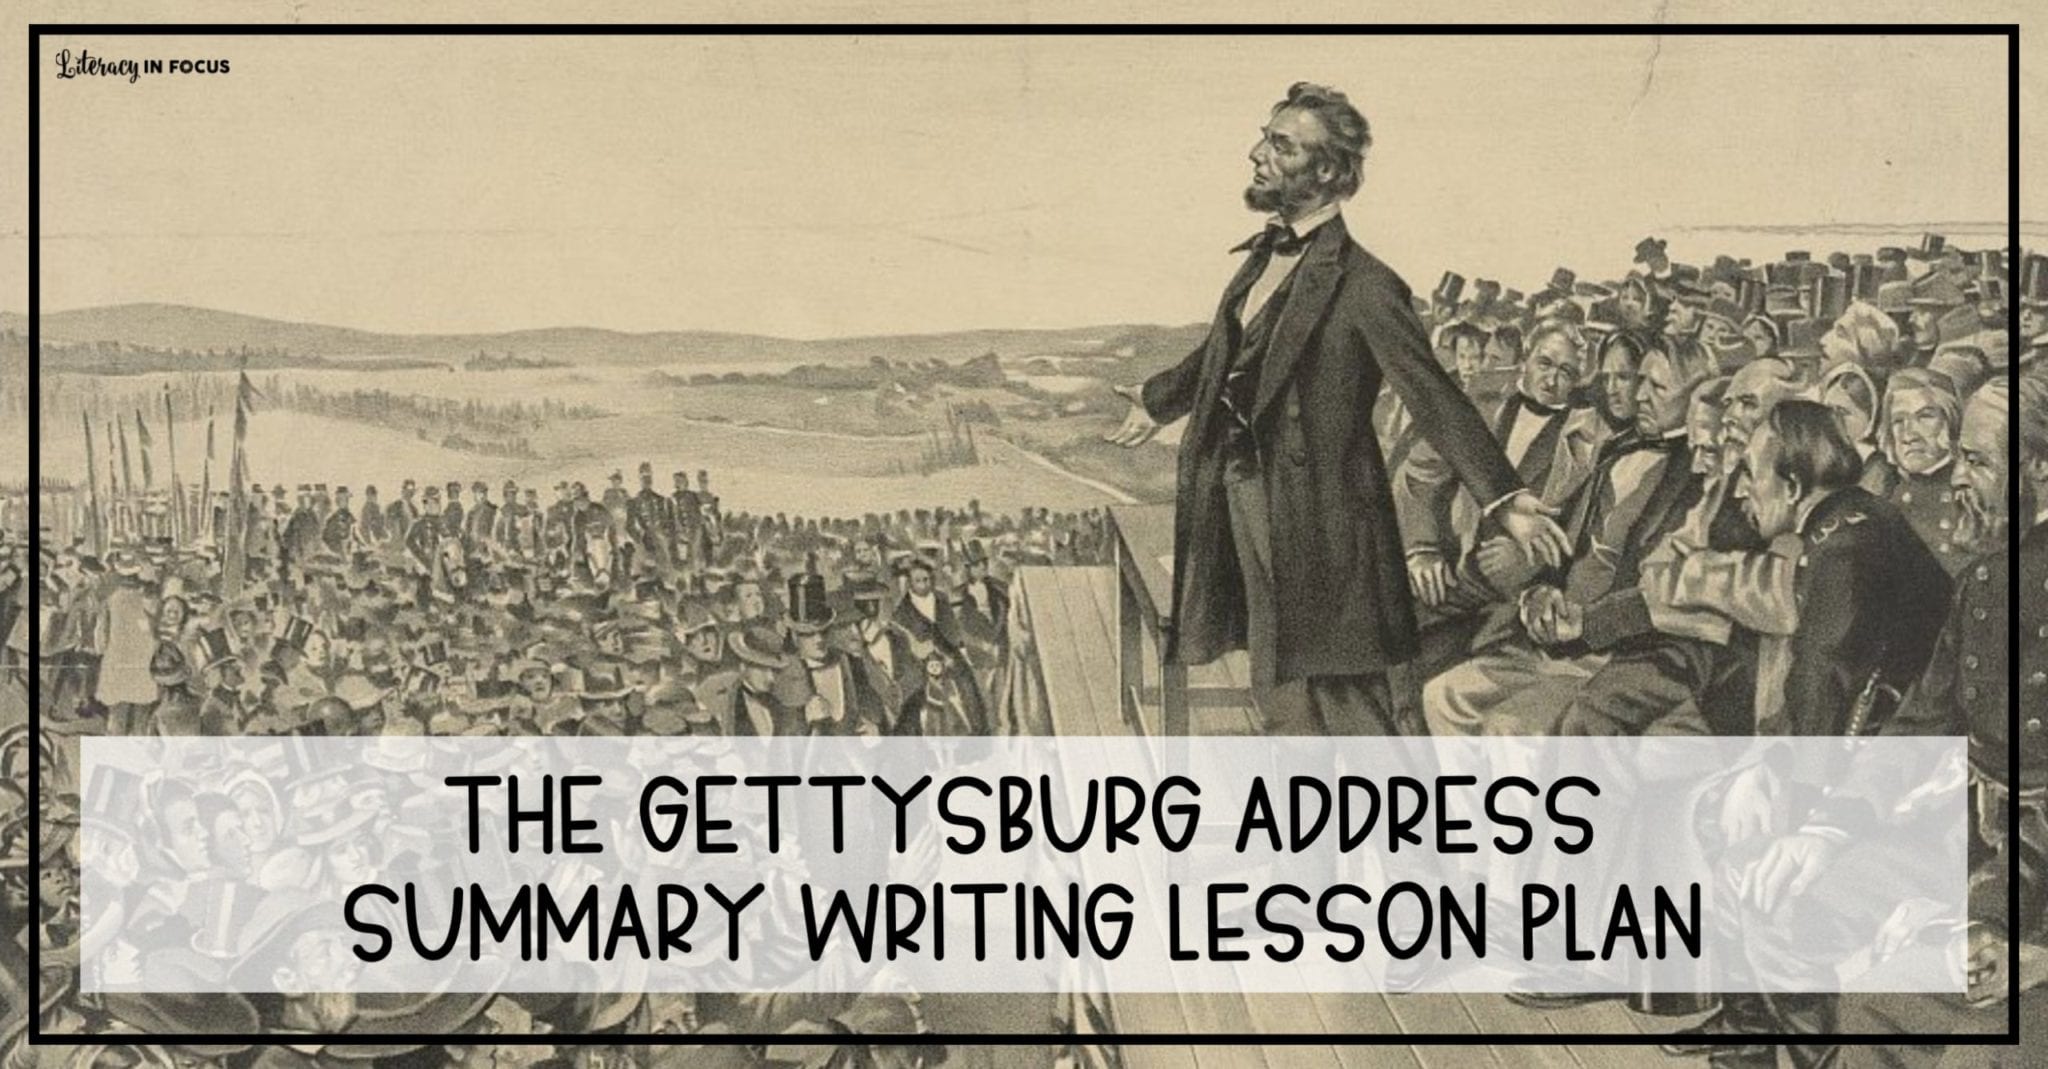 Gettysburg Address Lesson Plan